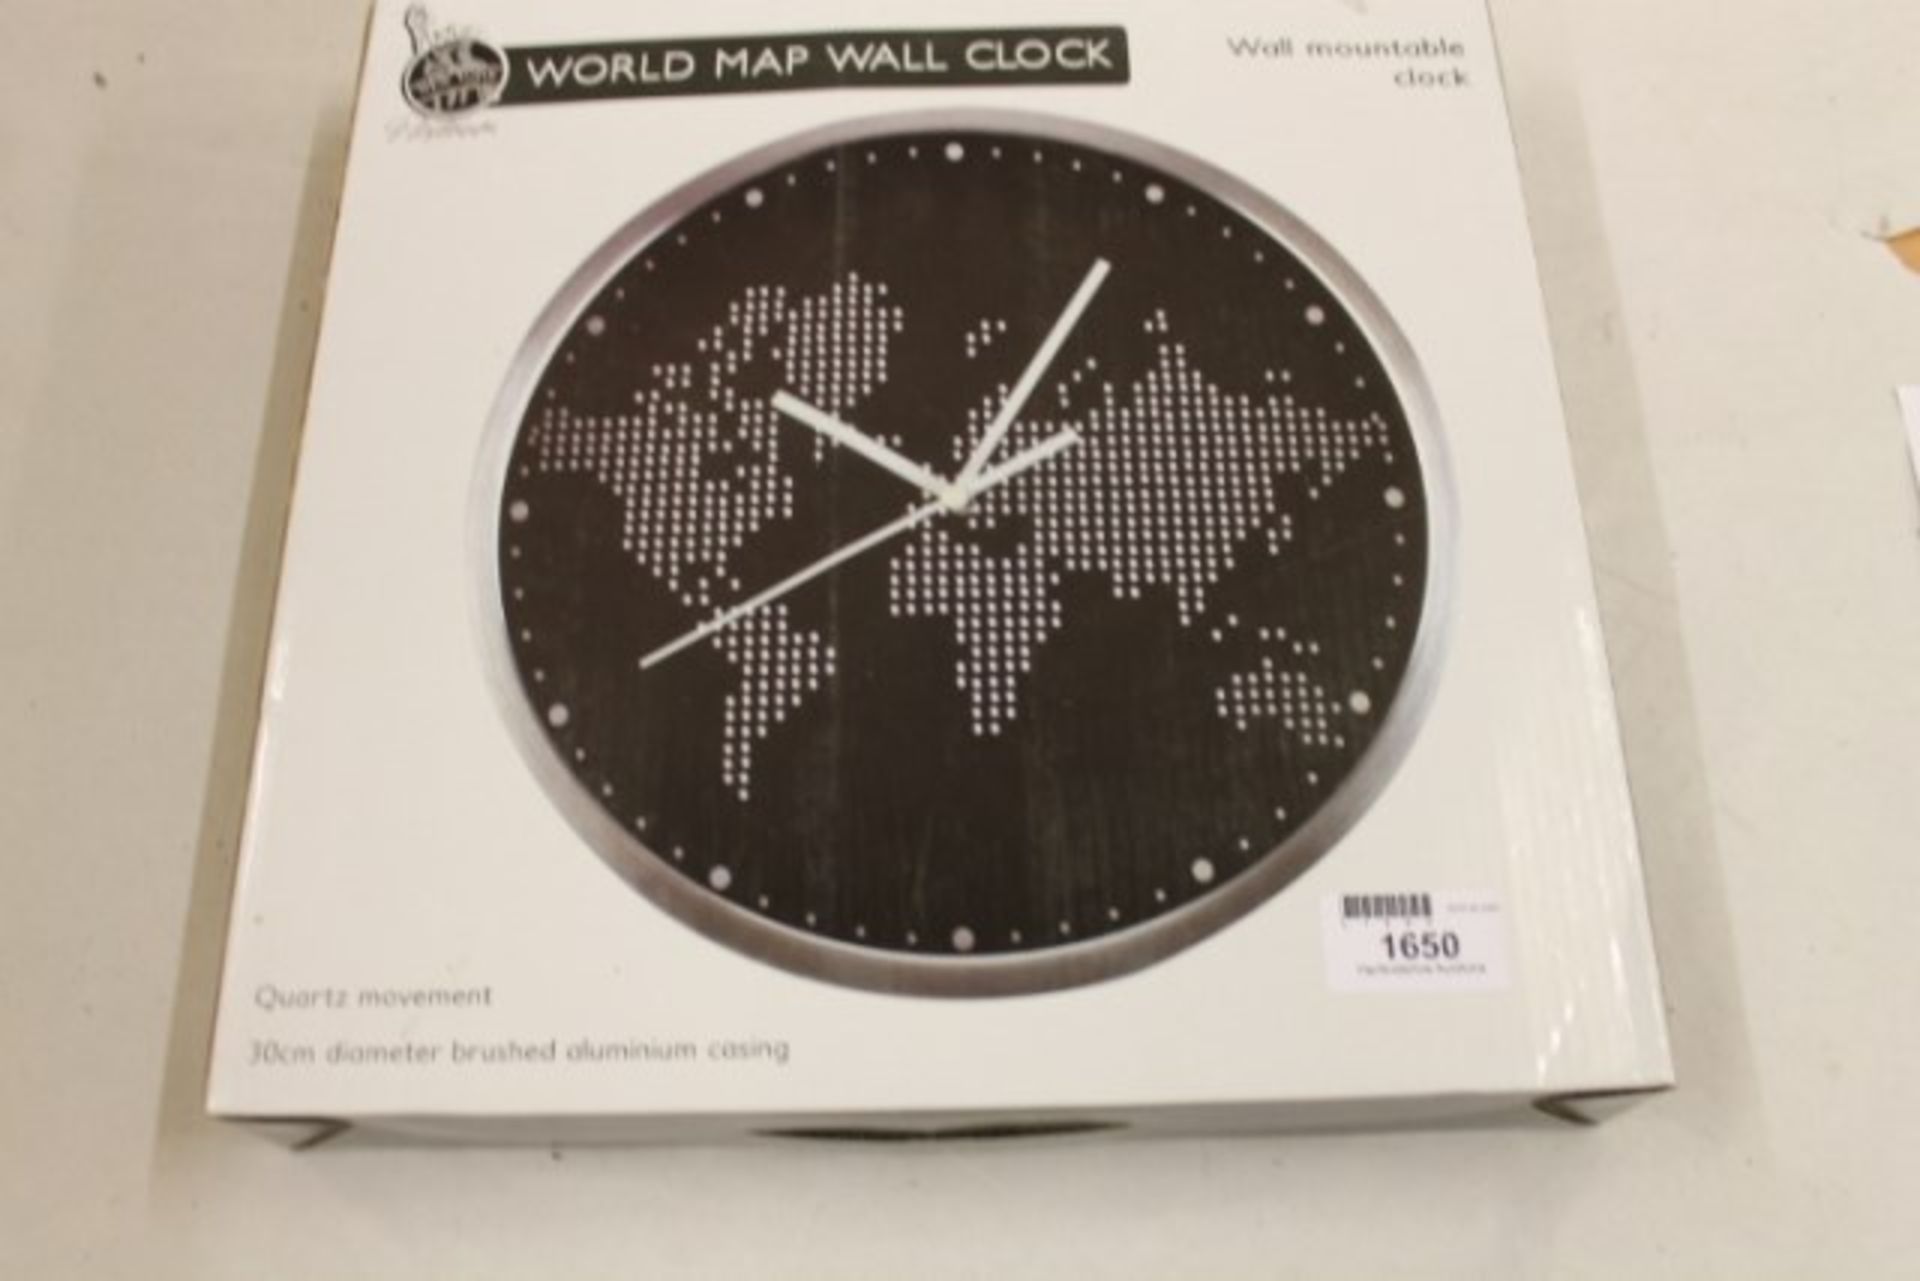 V *TRADE QTY* Grade A Brushed Aluminium Cased 30cm World Map Wall Clock RRP39.99 X 5 YOUR BID